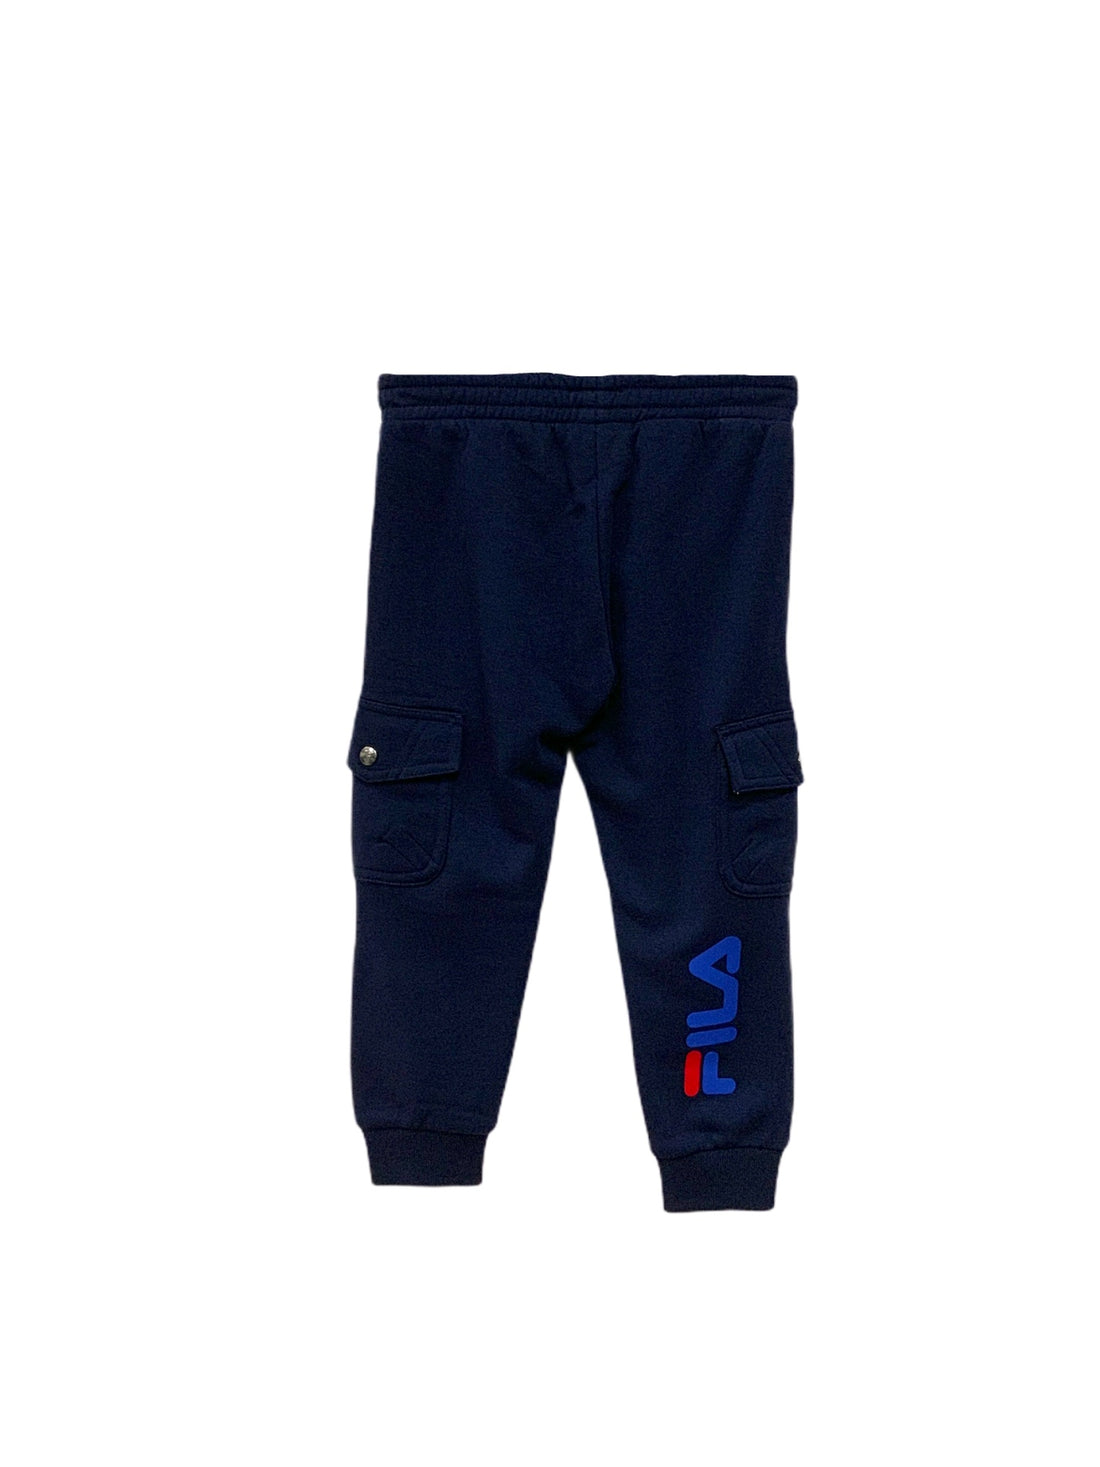 Pantaloni sportivi Blu Fila